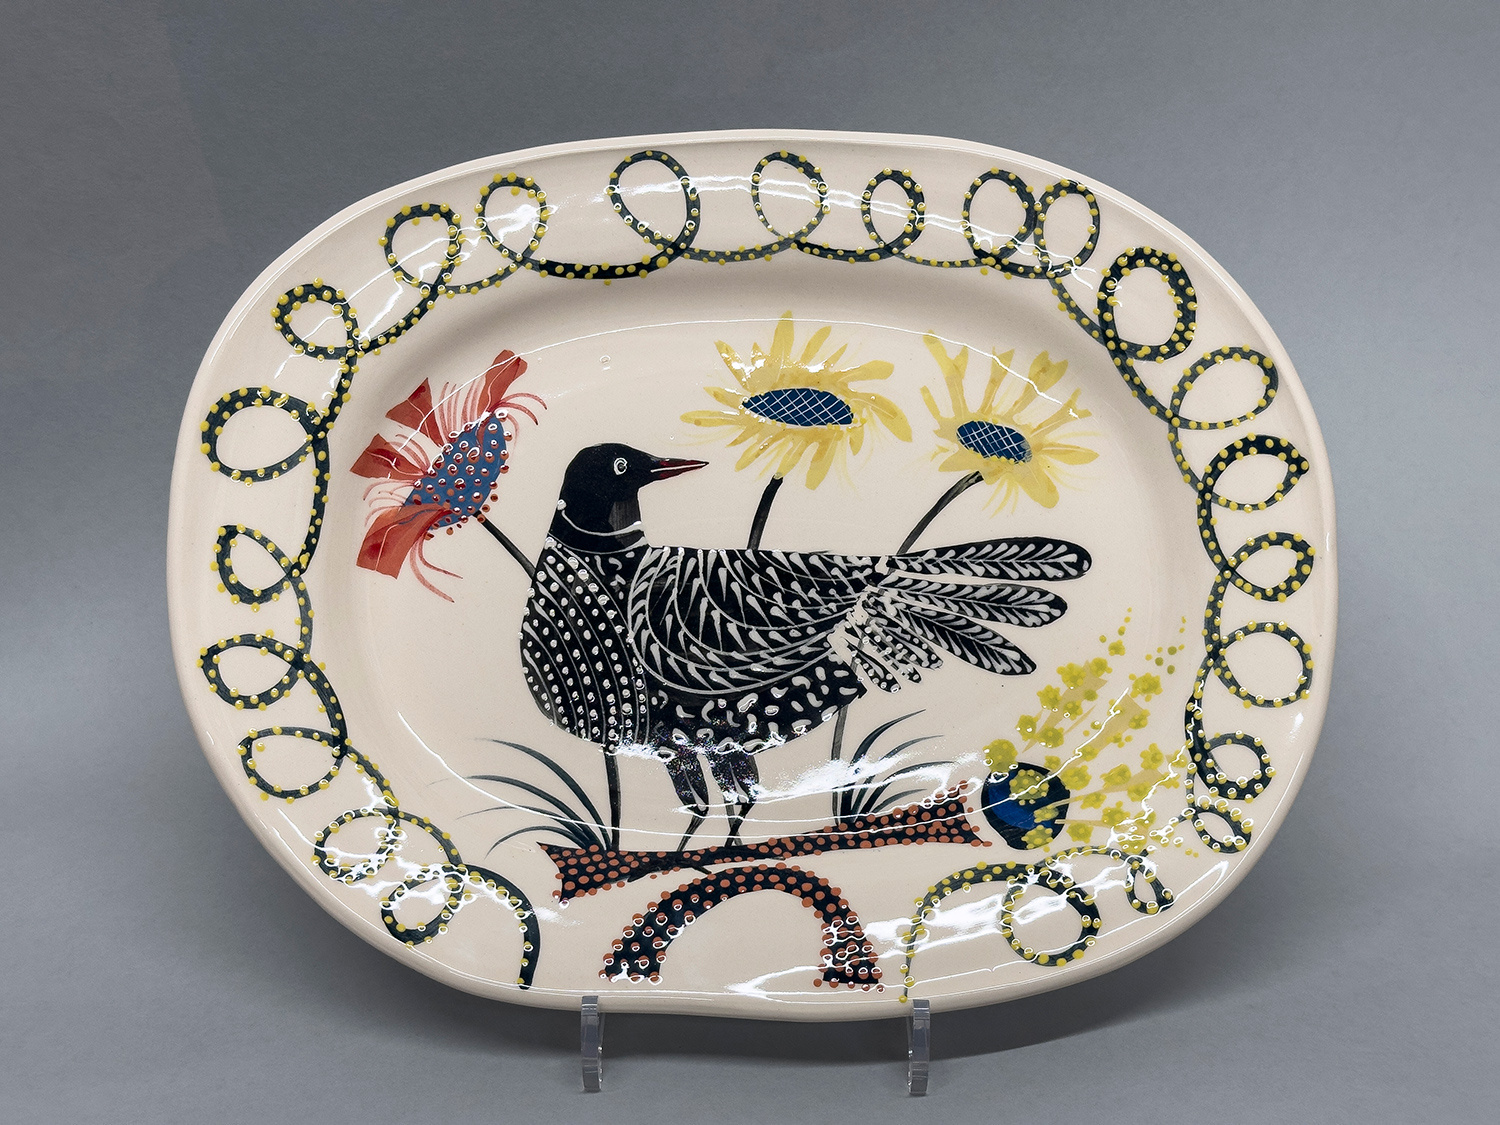 Medium Plate 'Bird with Flowers' by Irena Sibrijns